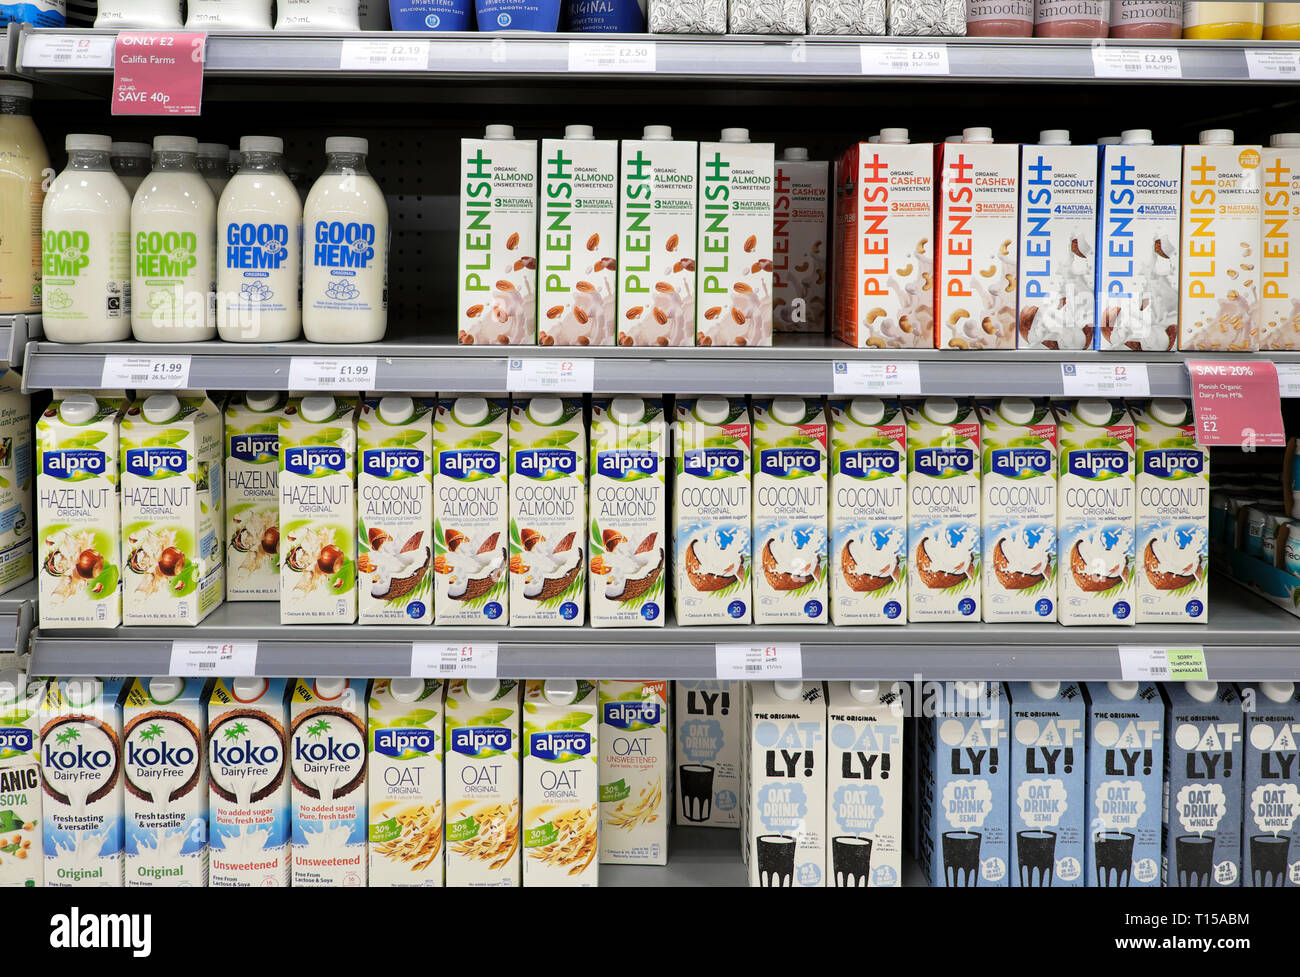 Tomorrow's Vegan Alternatives Are Reaching Supermarket Shelves - Forbes  India